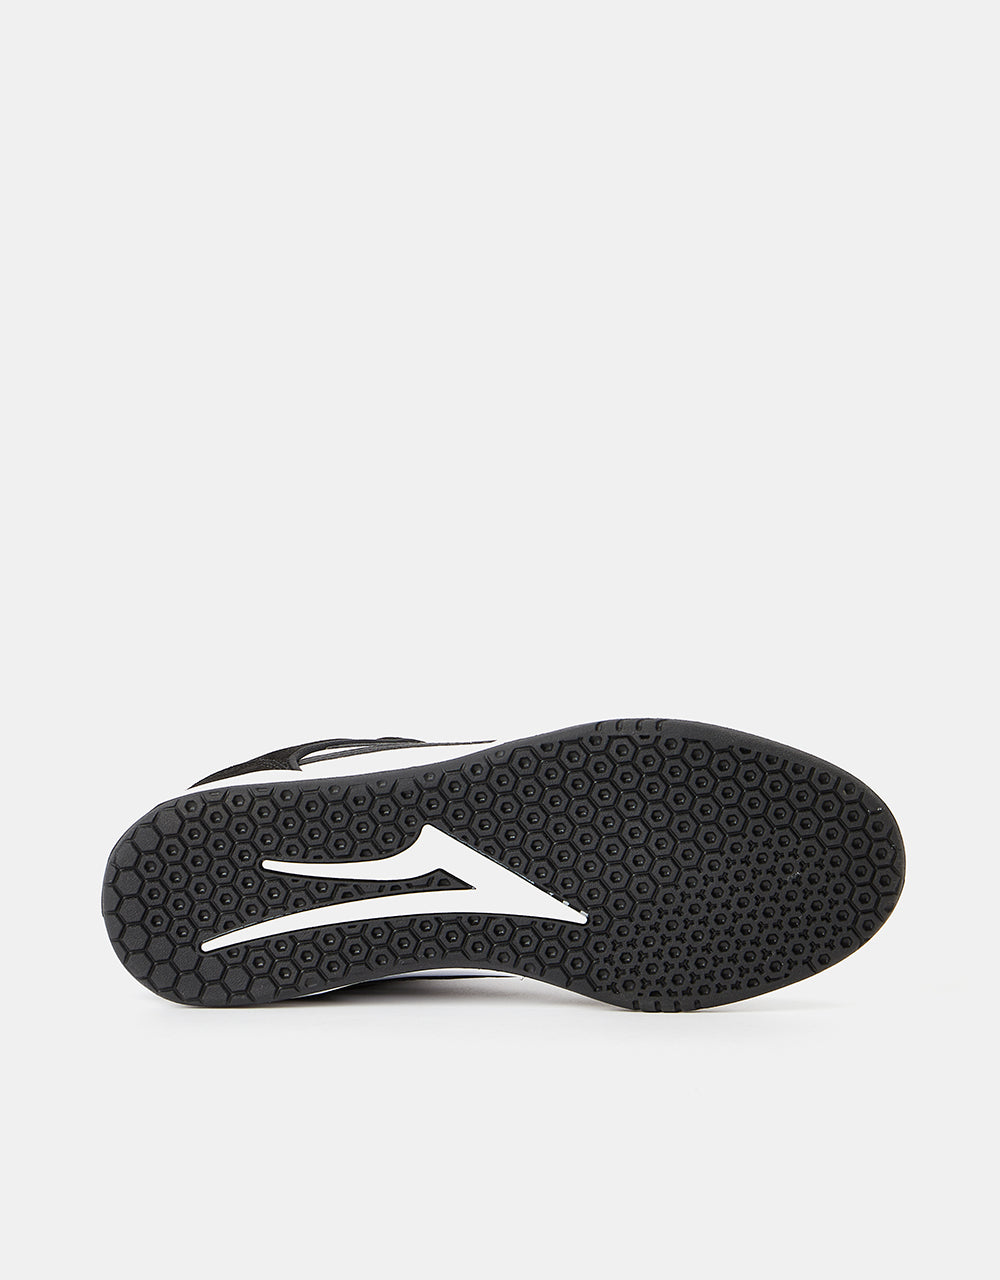 Lakai Telford Low Skate Shoes - Black/White Suede